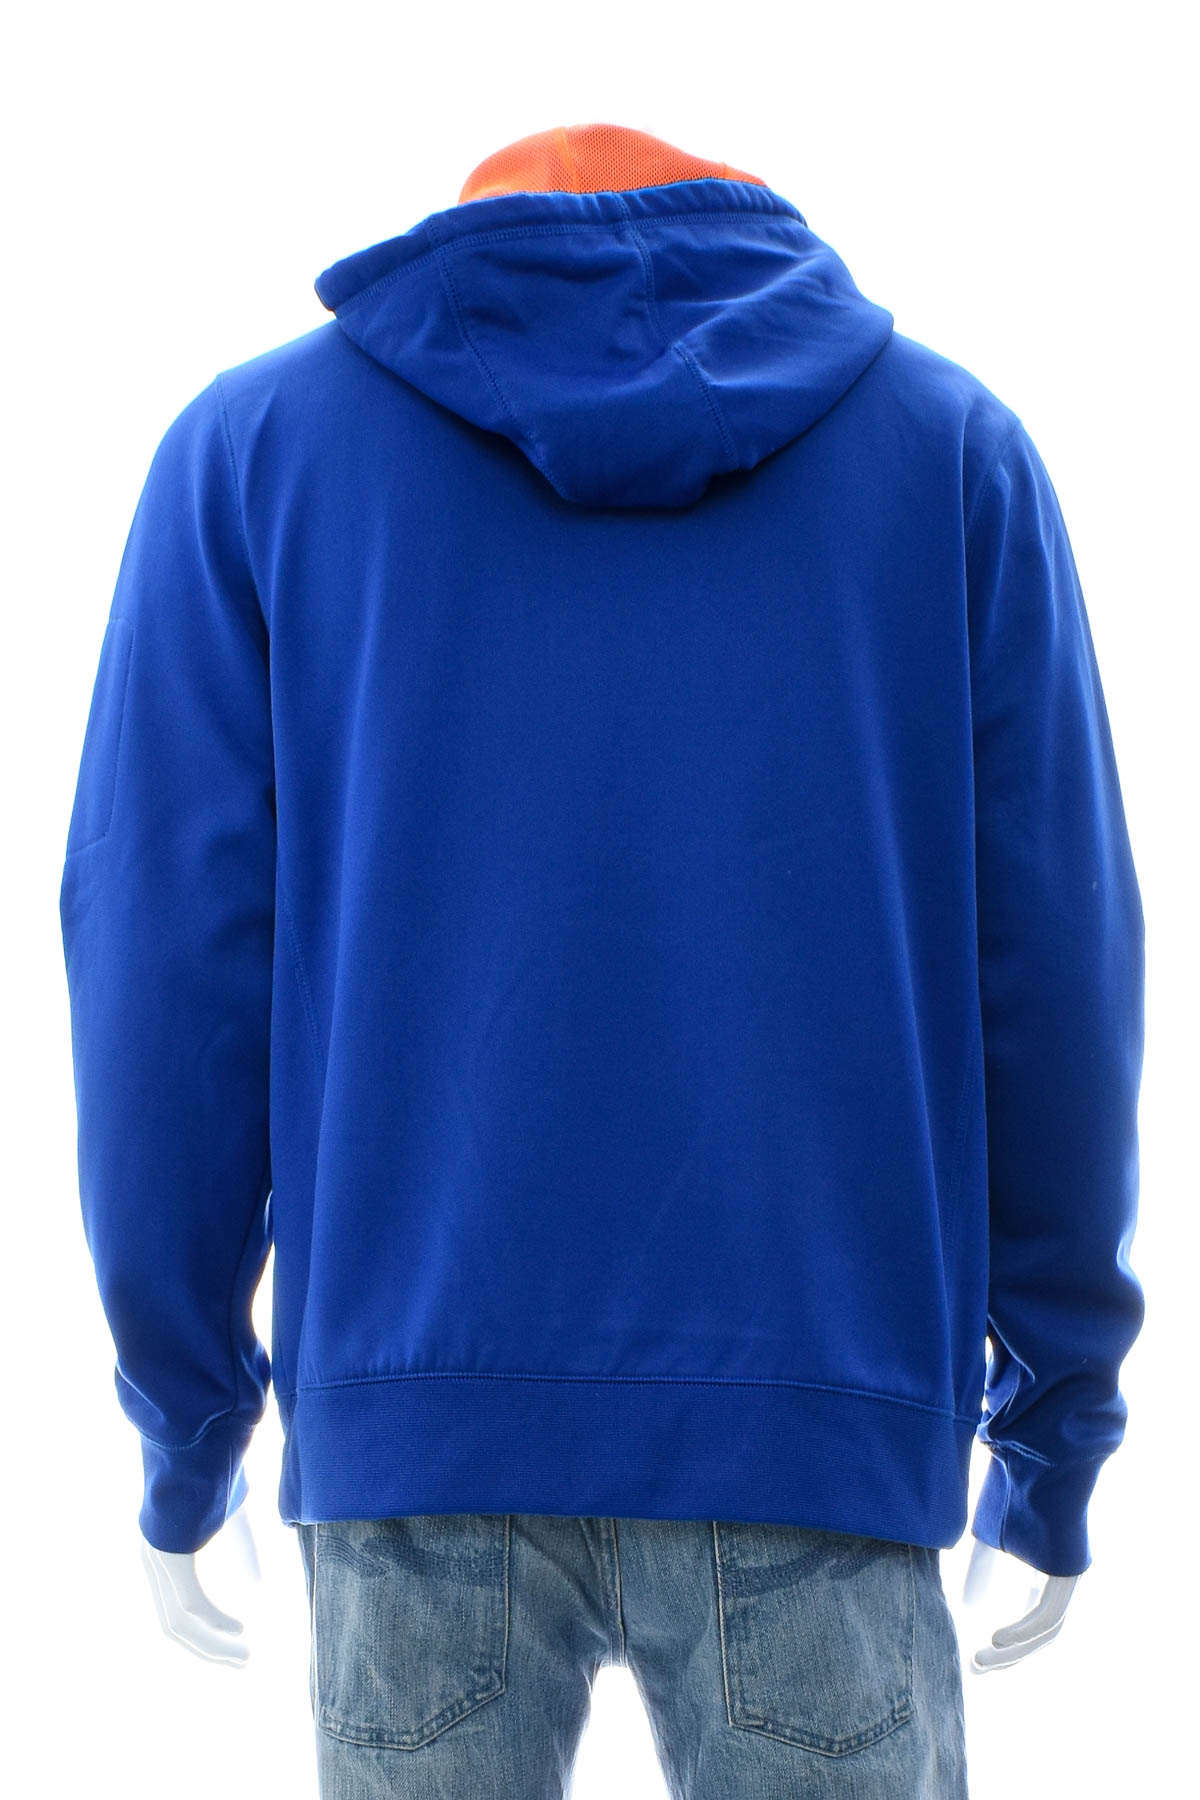 Men's sweatshirt - FILA - 1